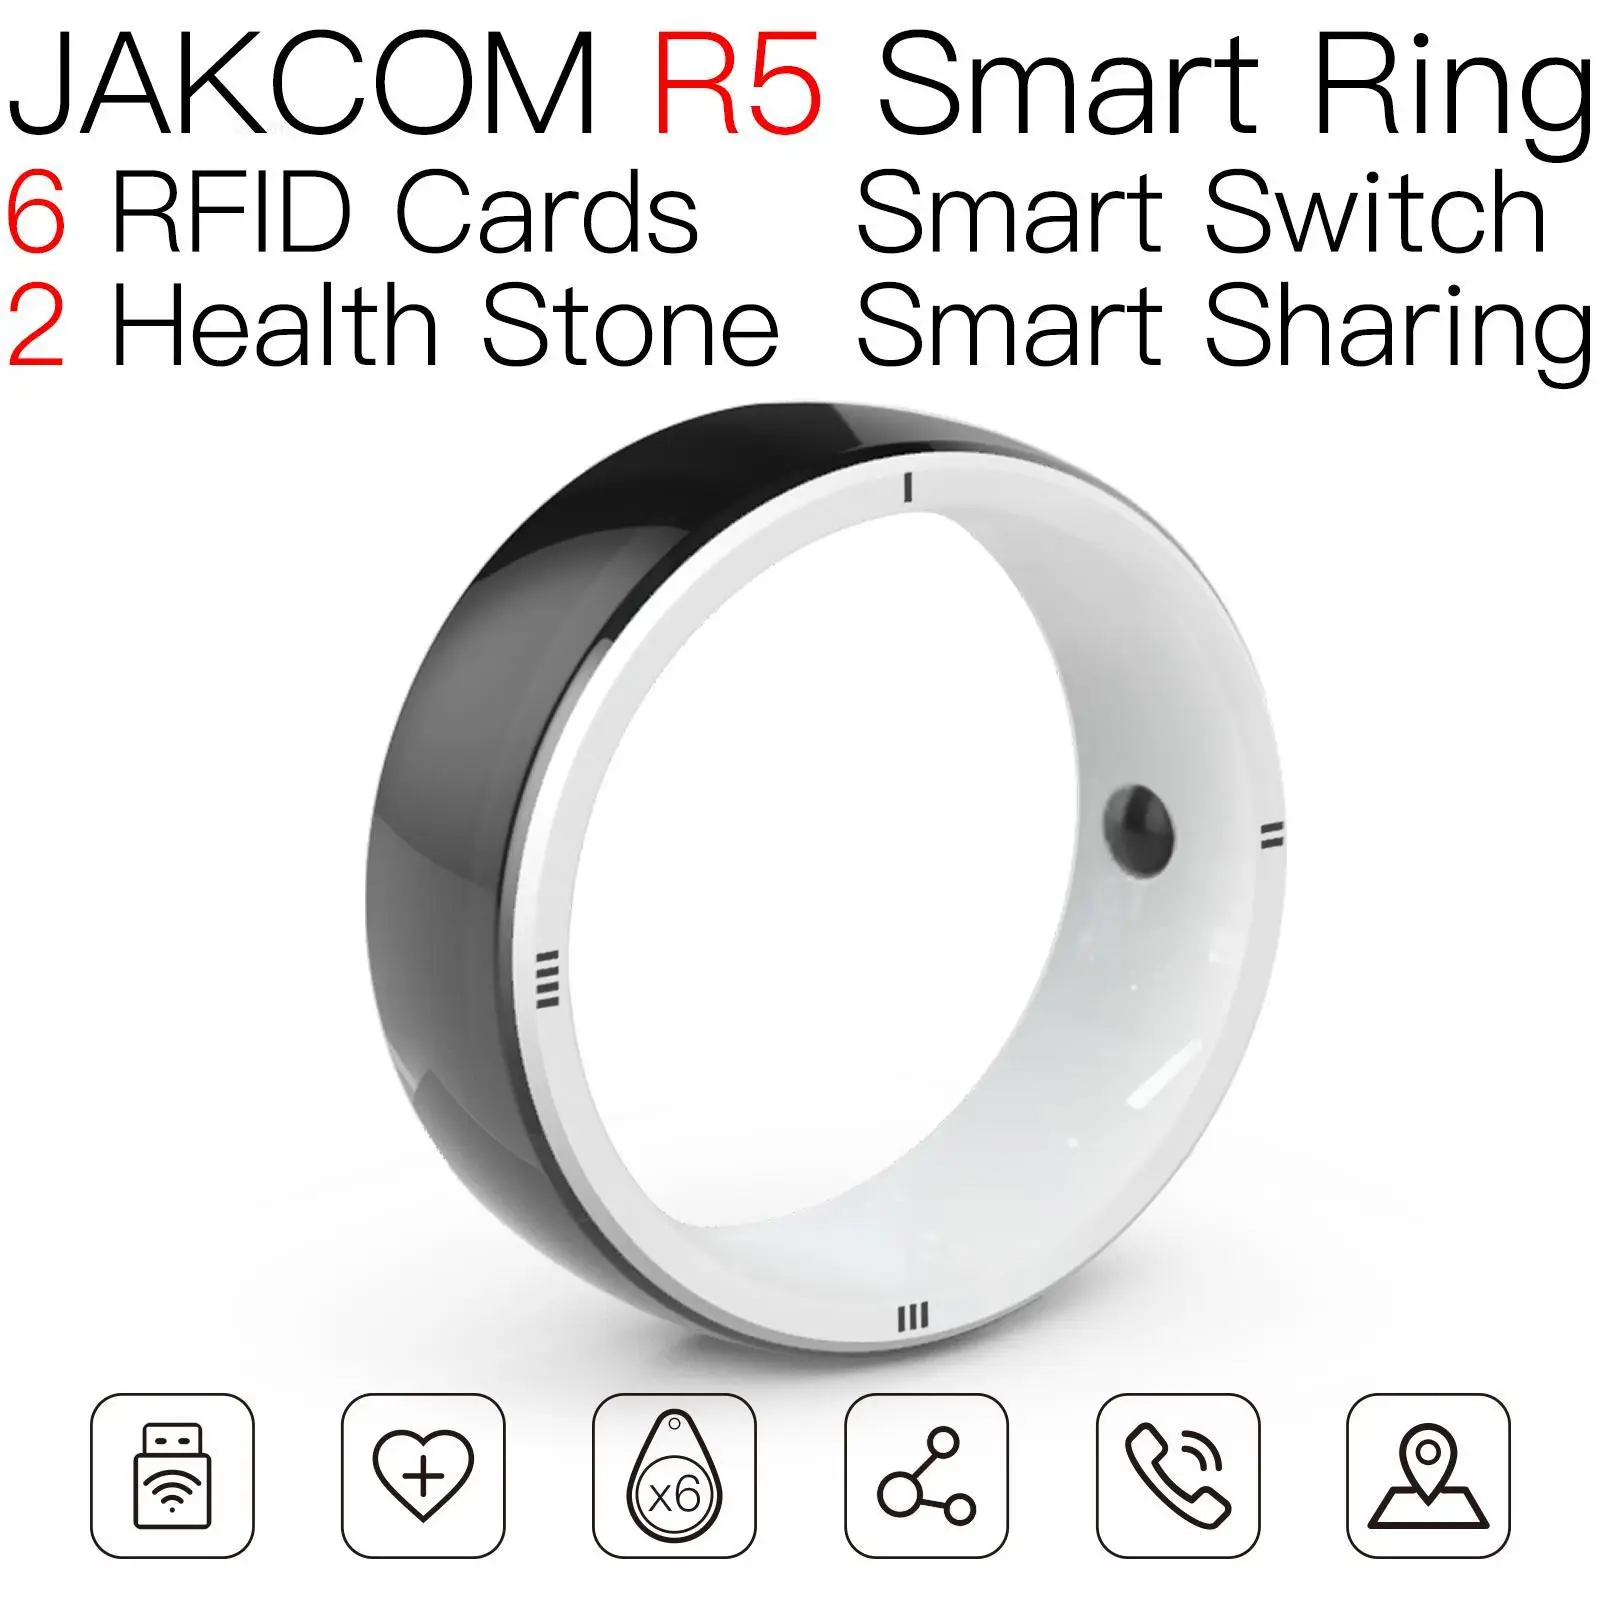 

JAKCOM R5 Smart Ring Super value than rfid em 4305 set nfc tags chip ntag215 504 bytes memory waterproof blanks